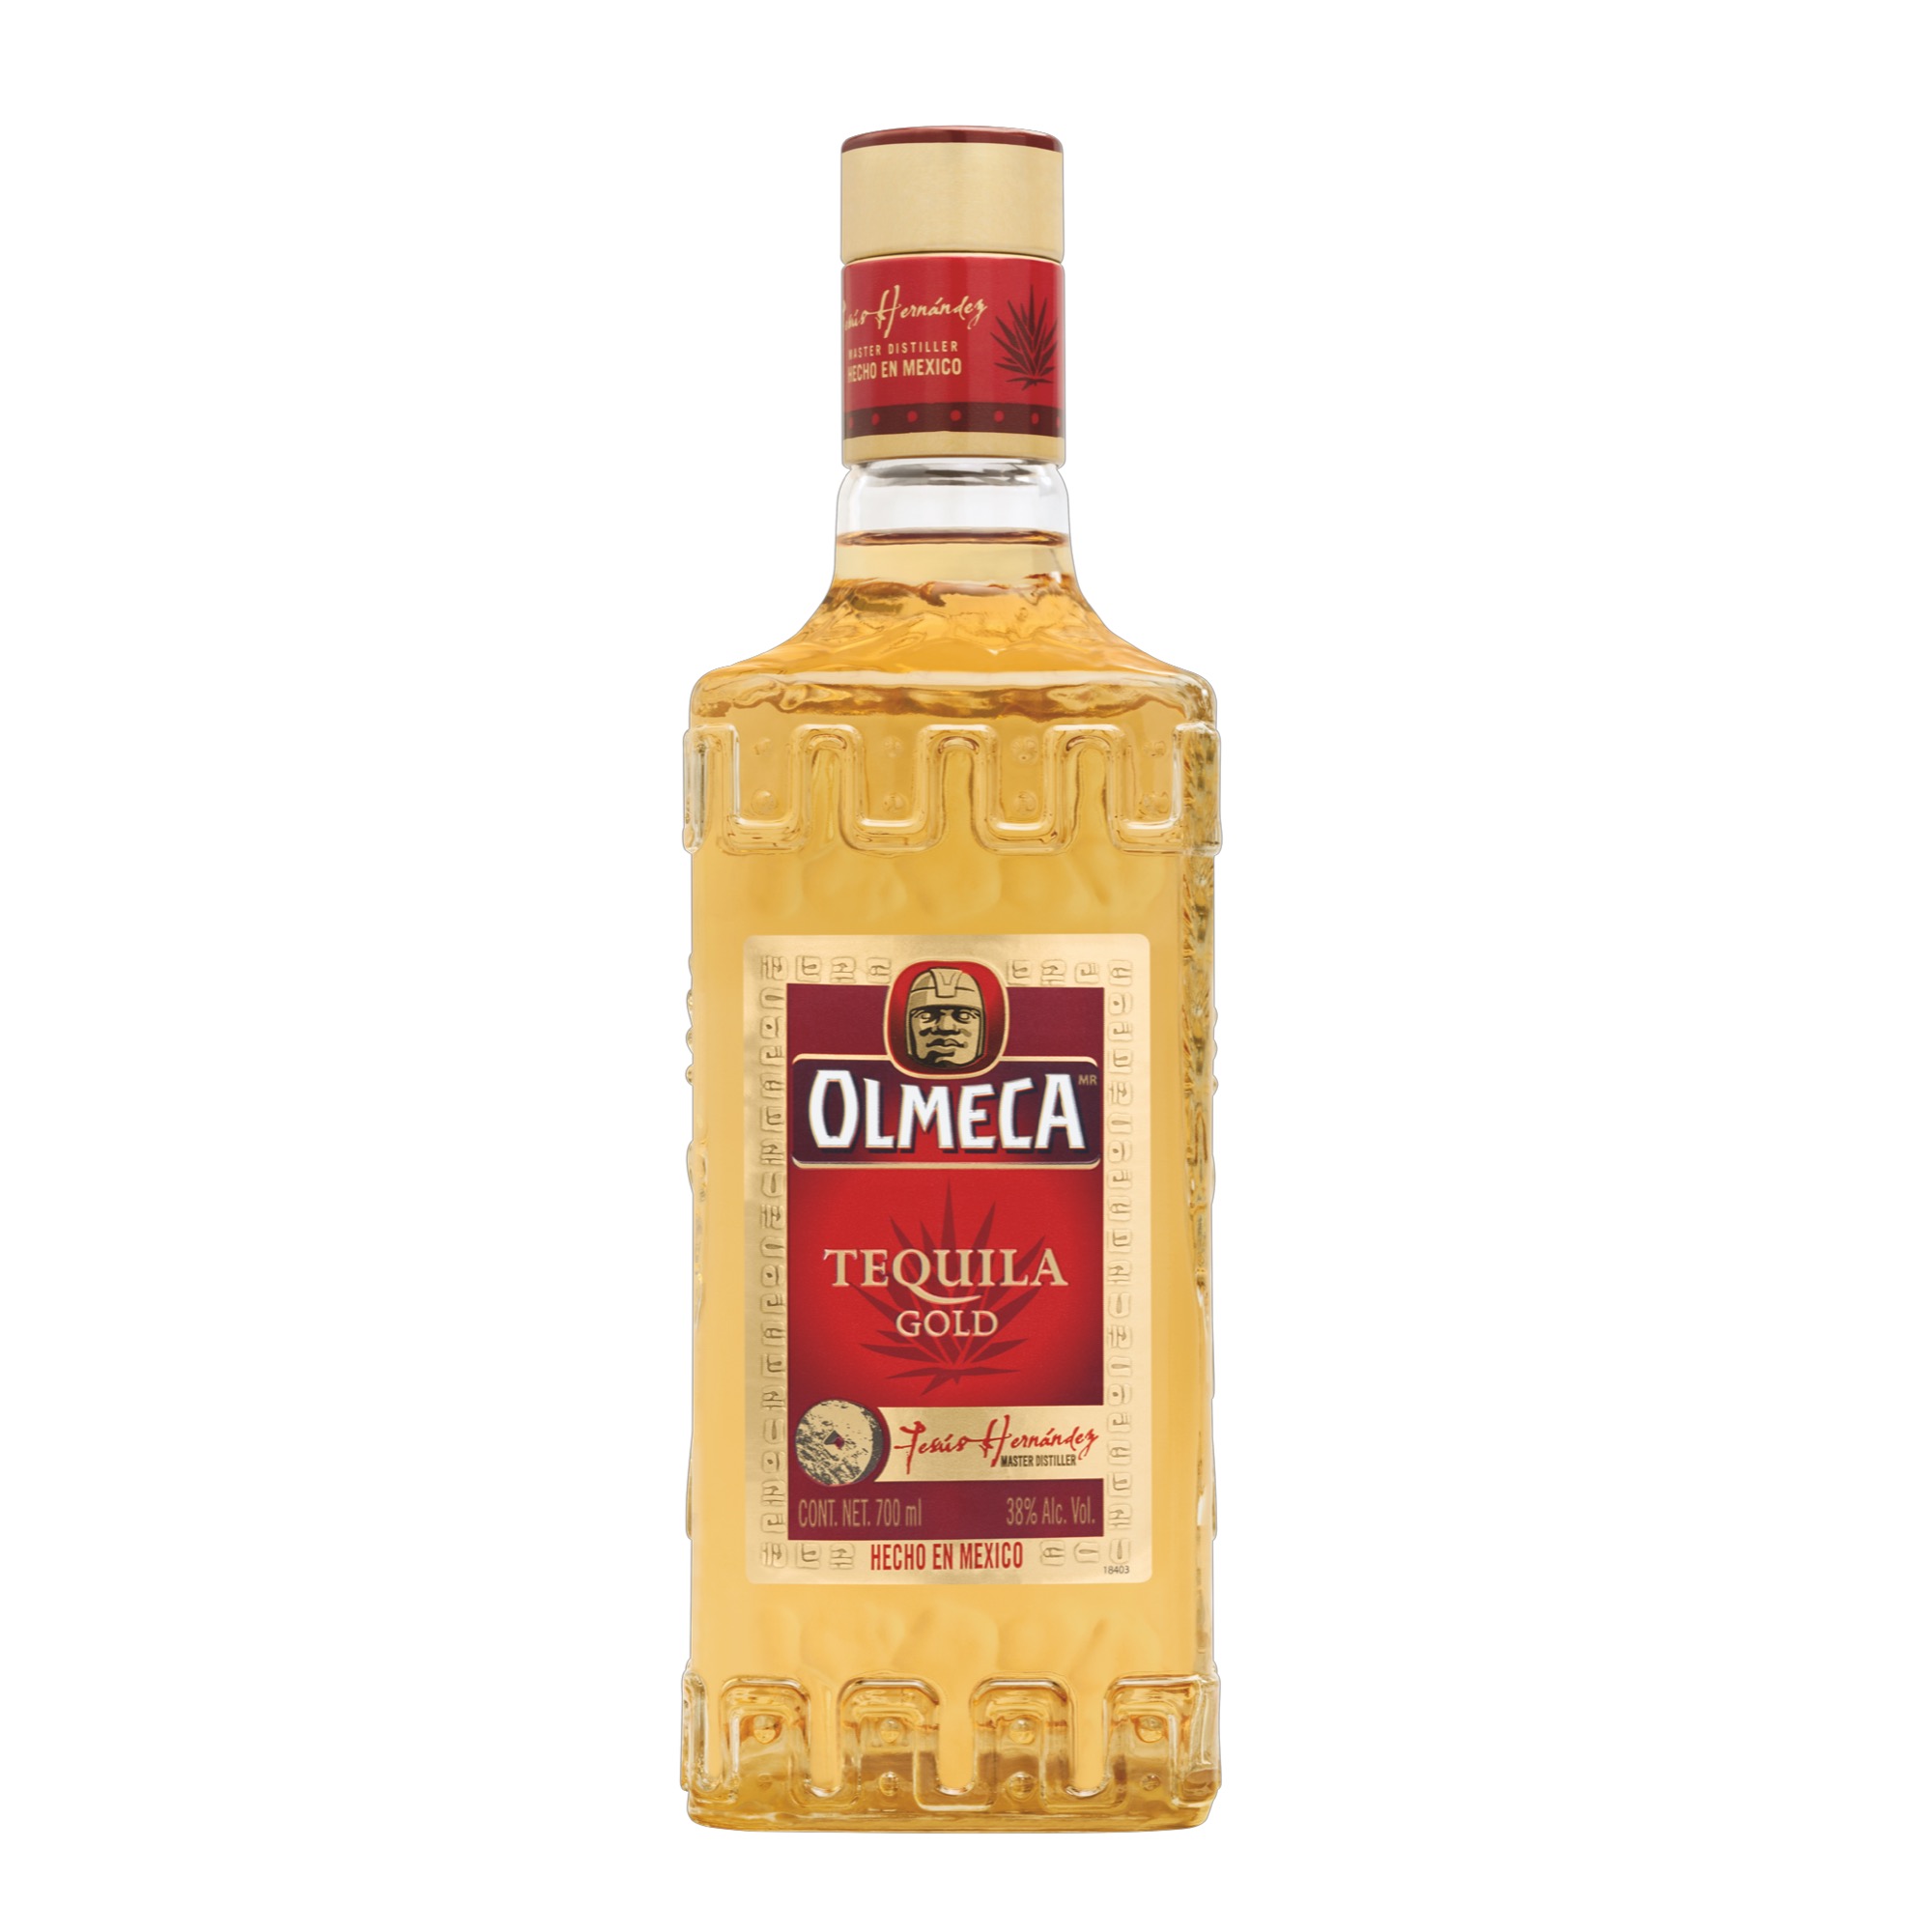 Olmeca Tequila 38% 0,7l, Gold